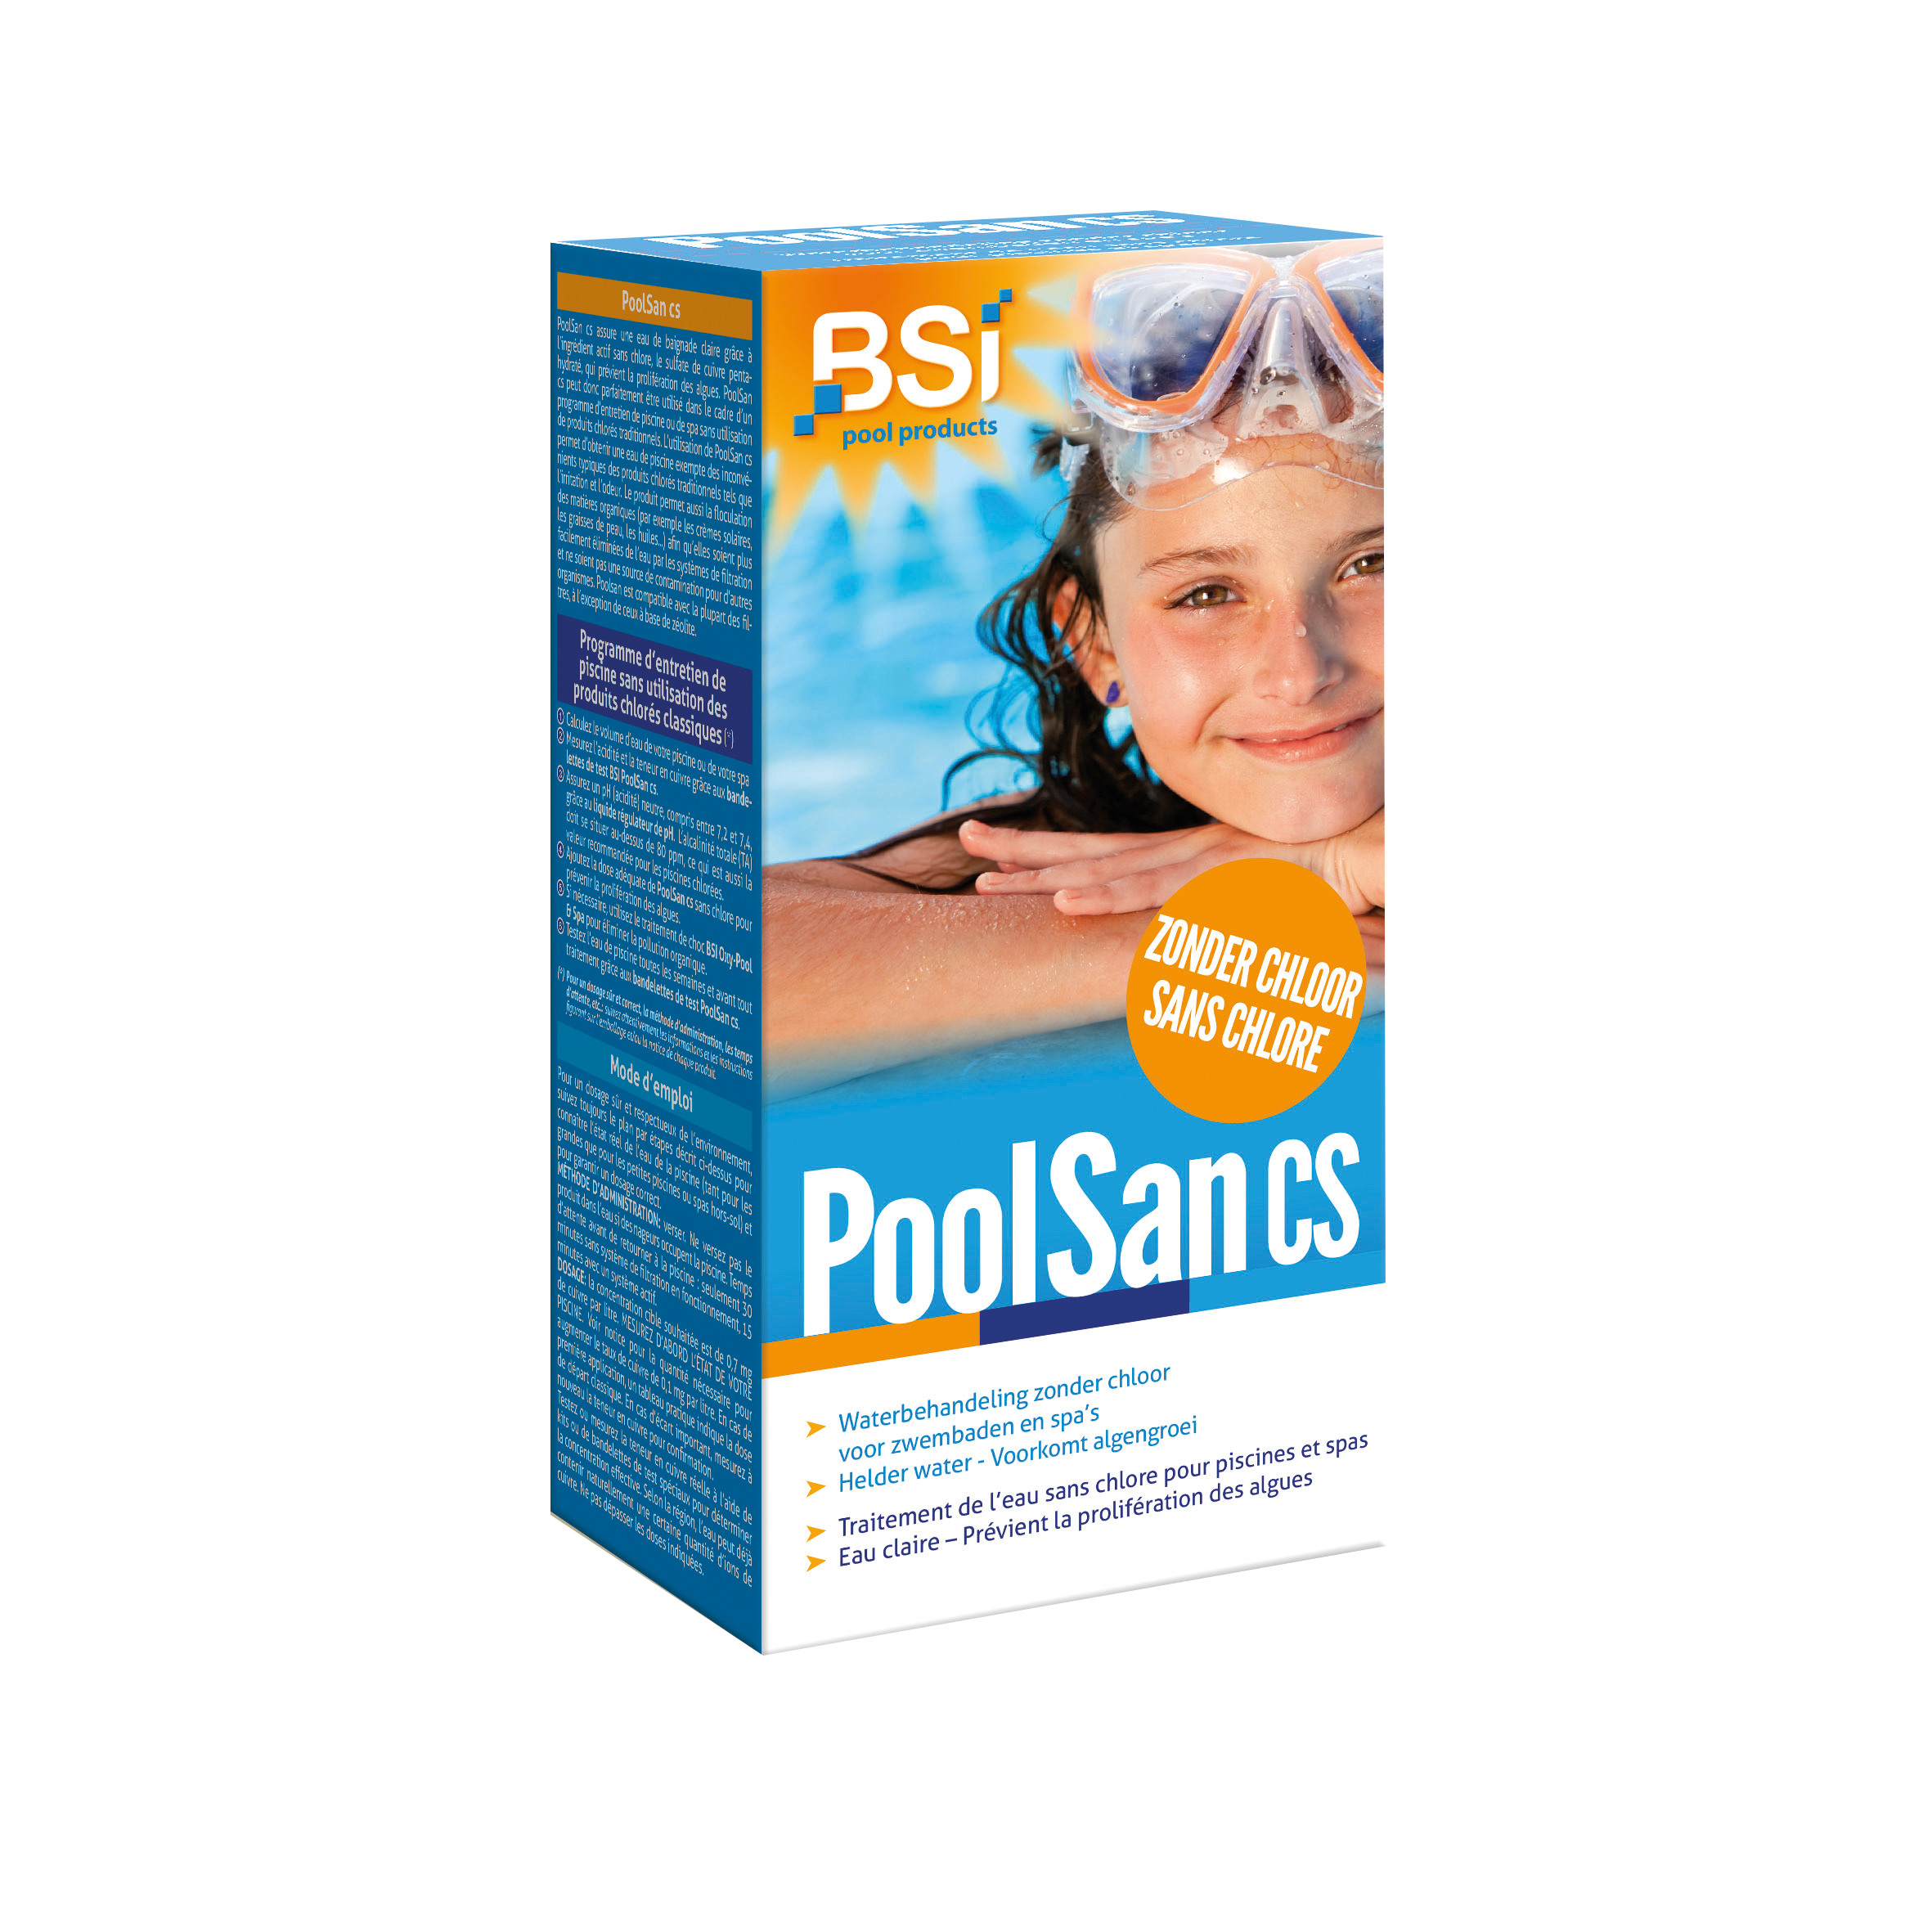 PoolSan cs (BE2020-0005) - BSI 250 ml BE image